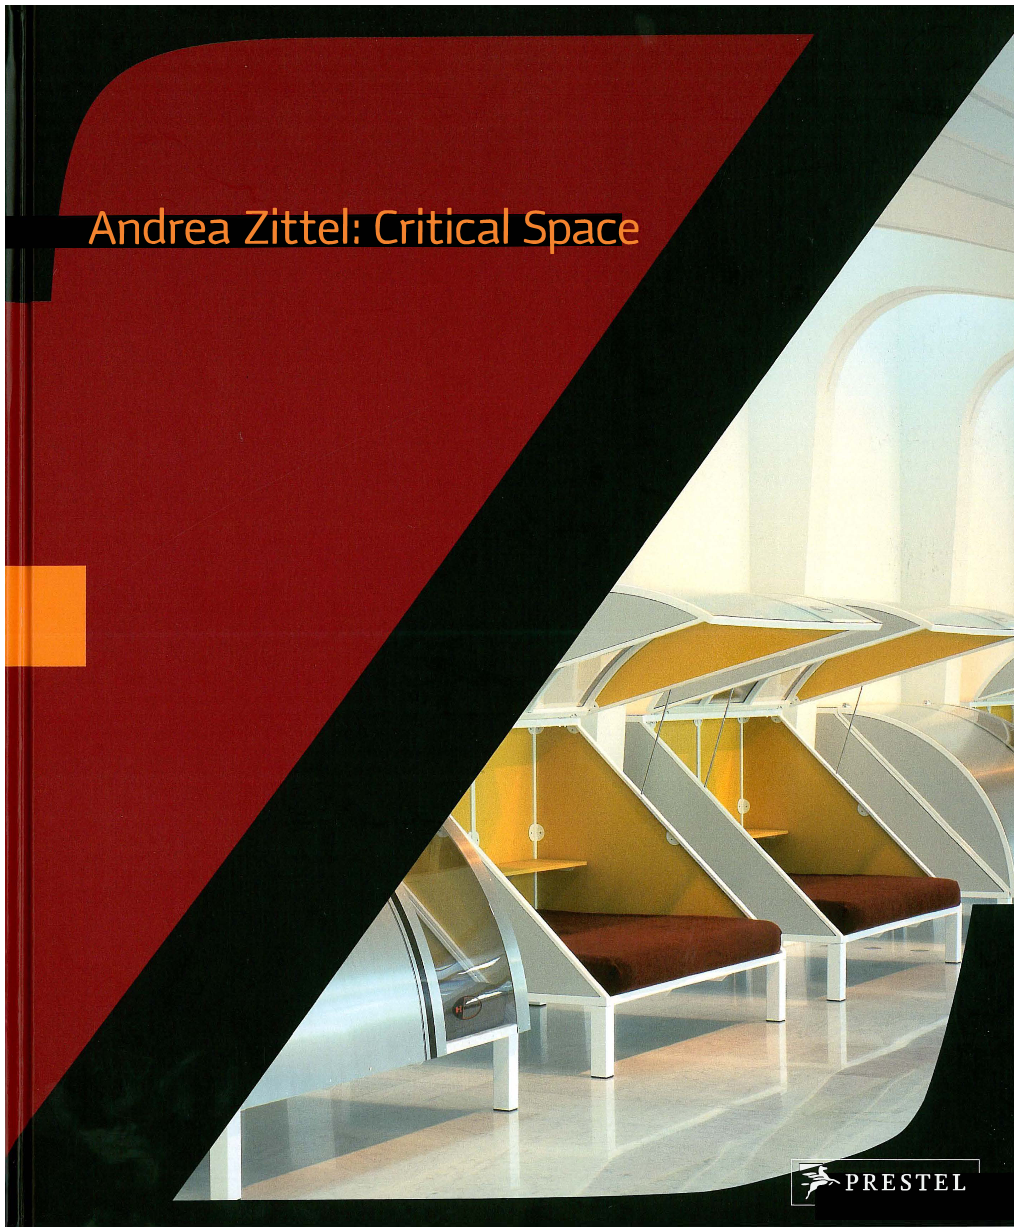 Andrea Zittel: Critical Space